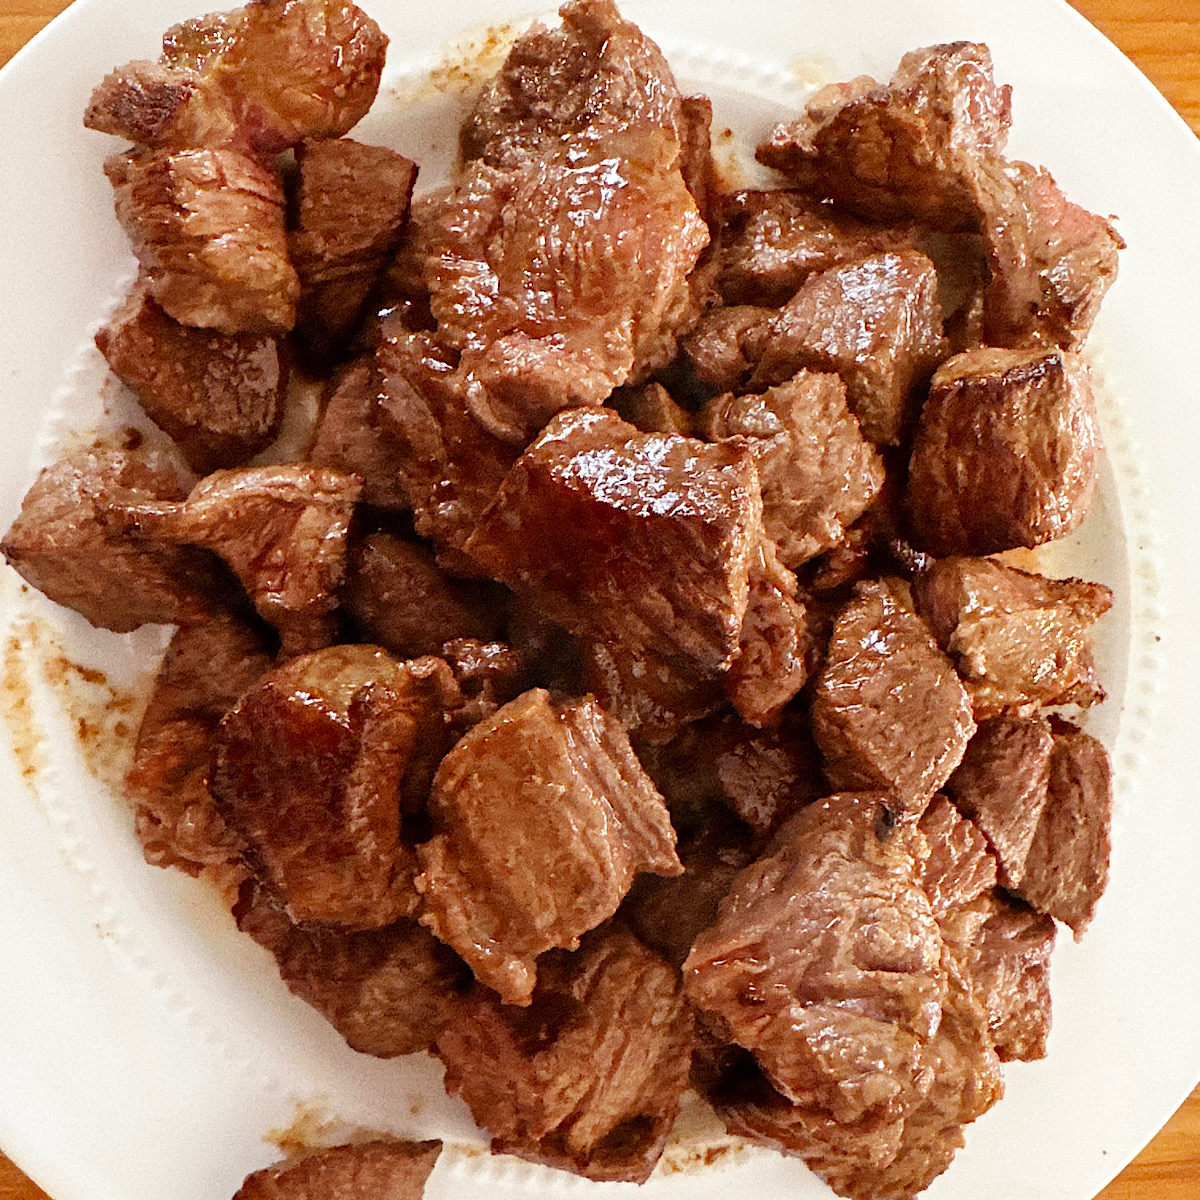 Seared chuck roast meat on a white plate.